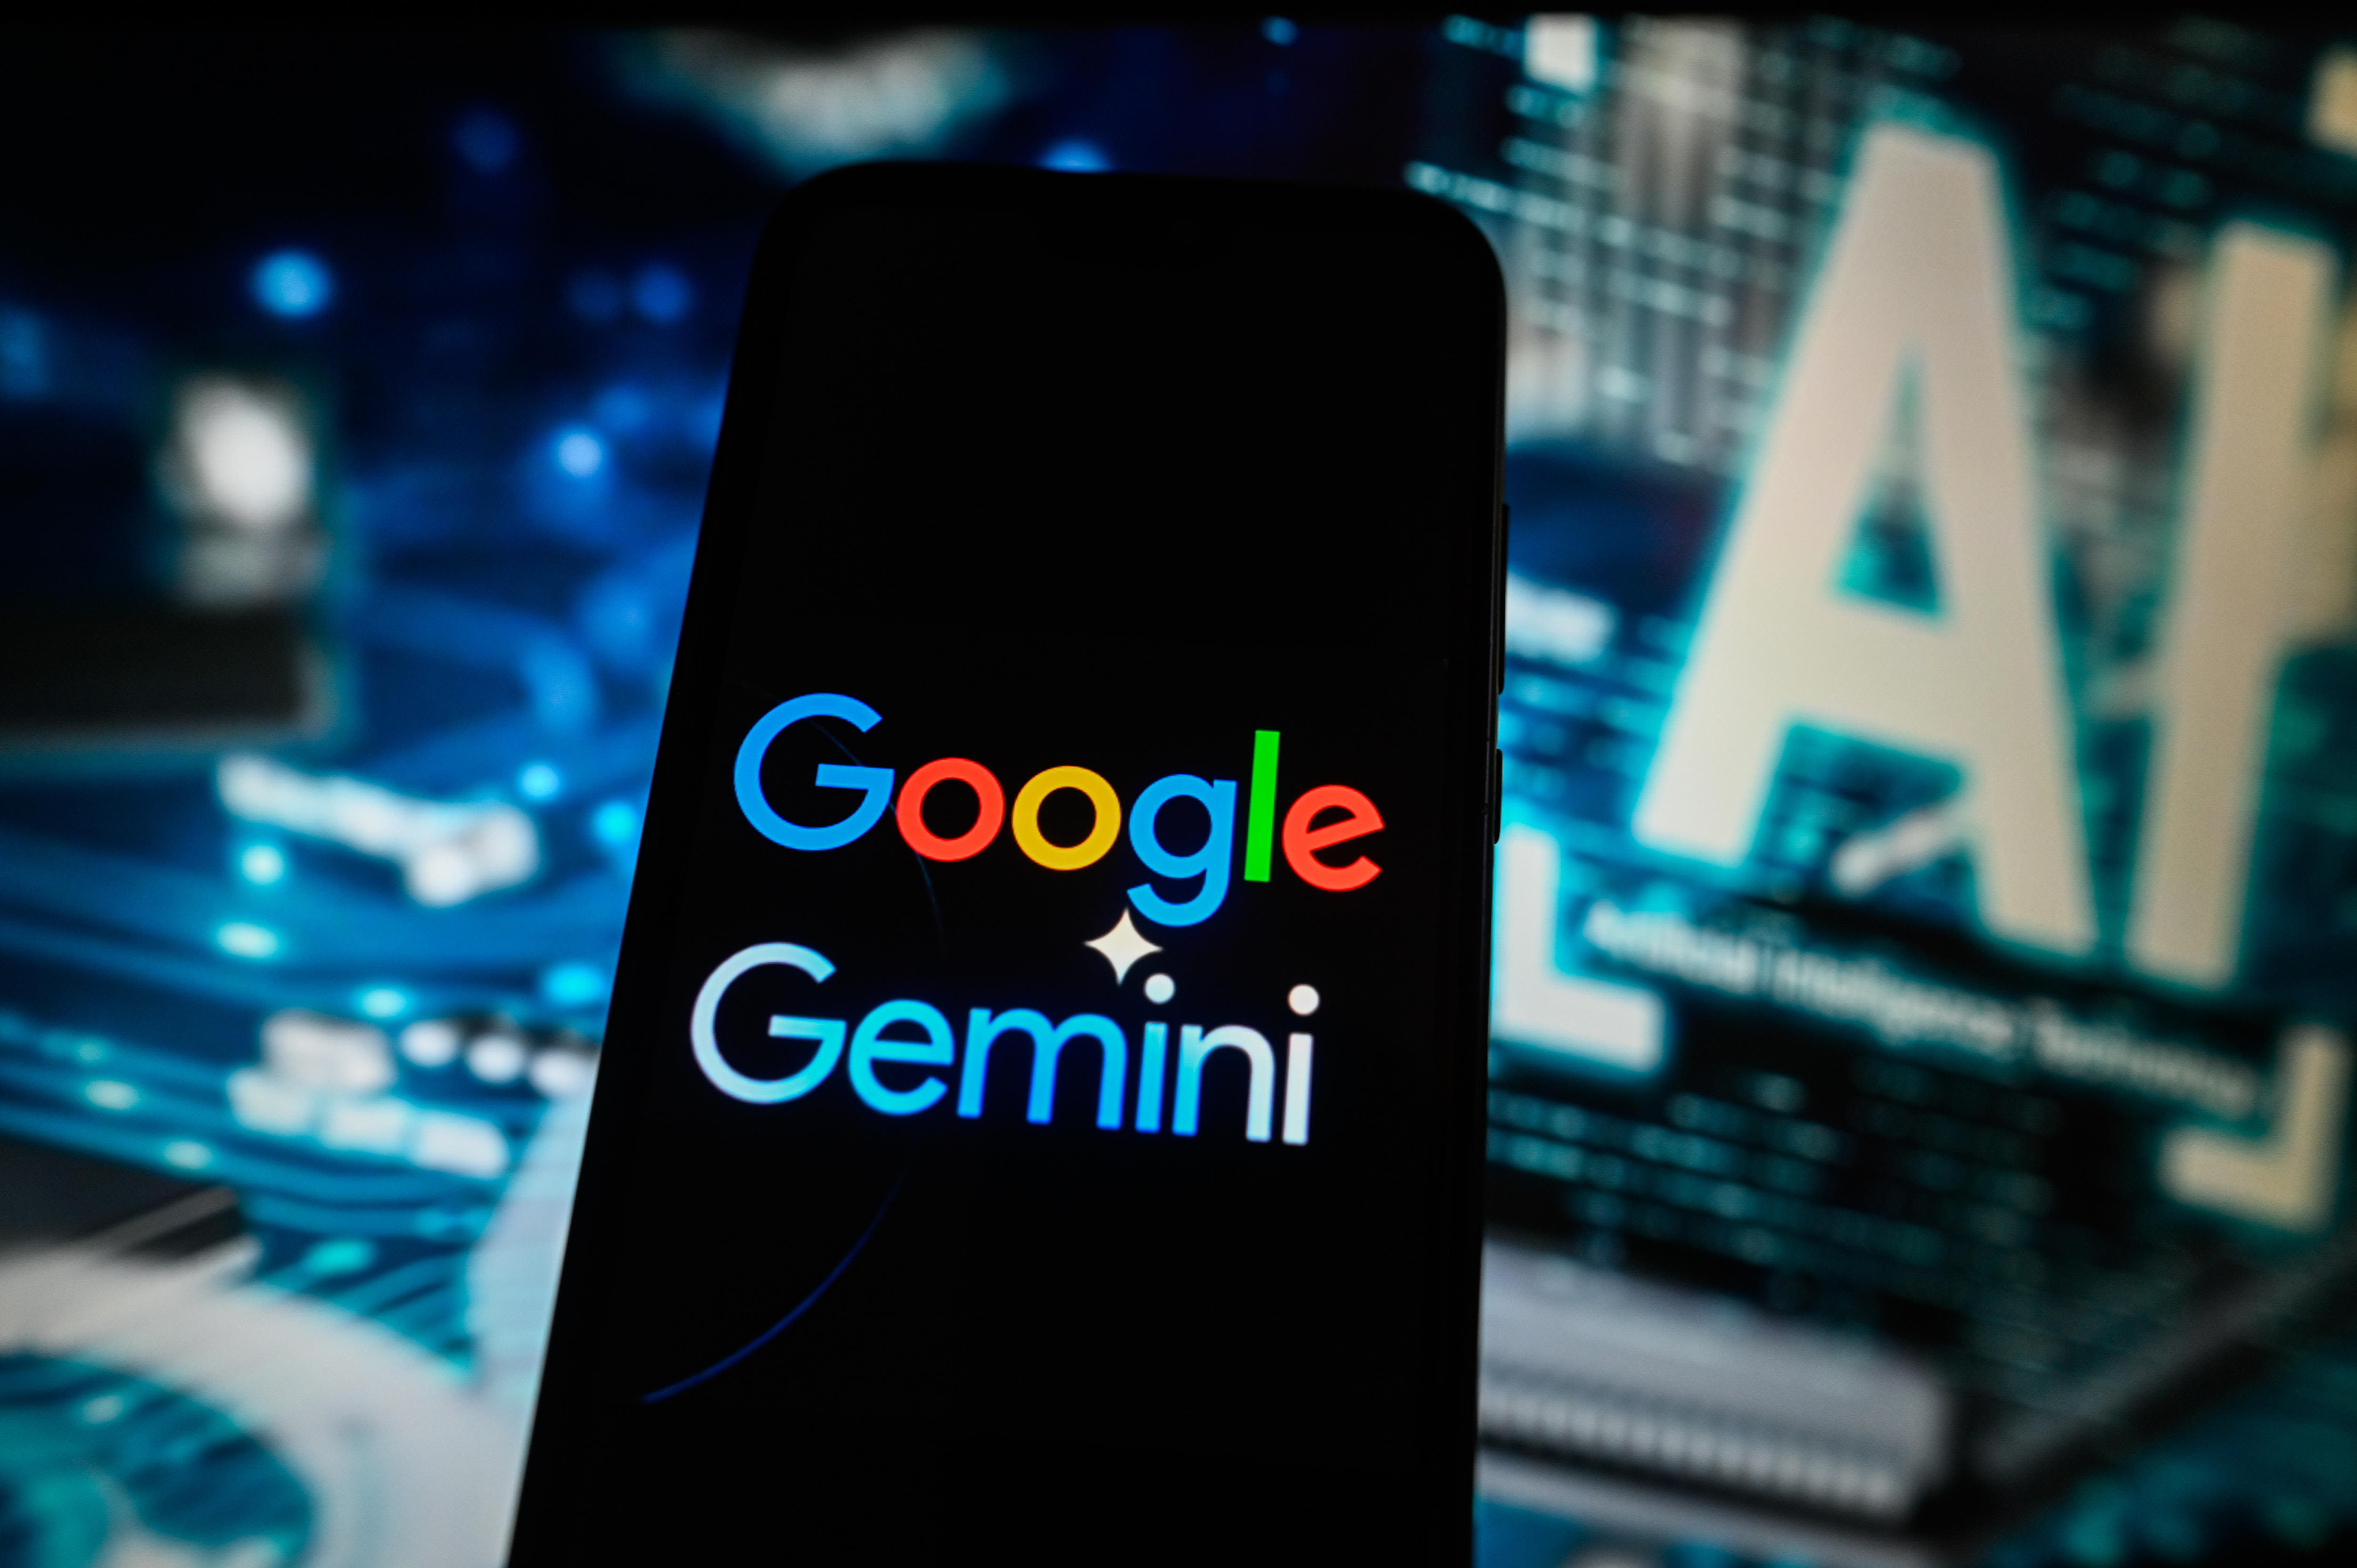 Google's Gemini AI Olympics-themed ad sparks fierce backlash